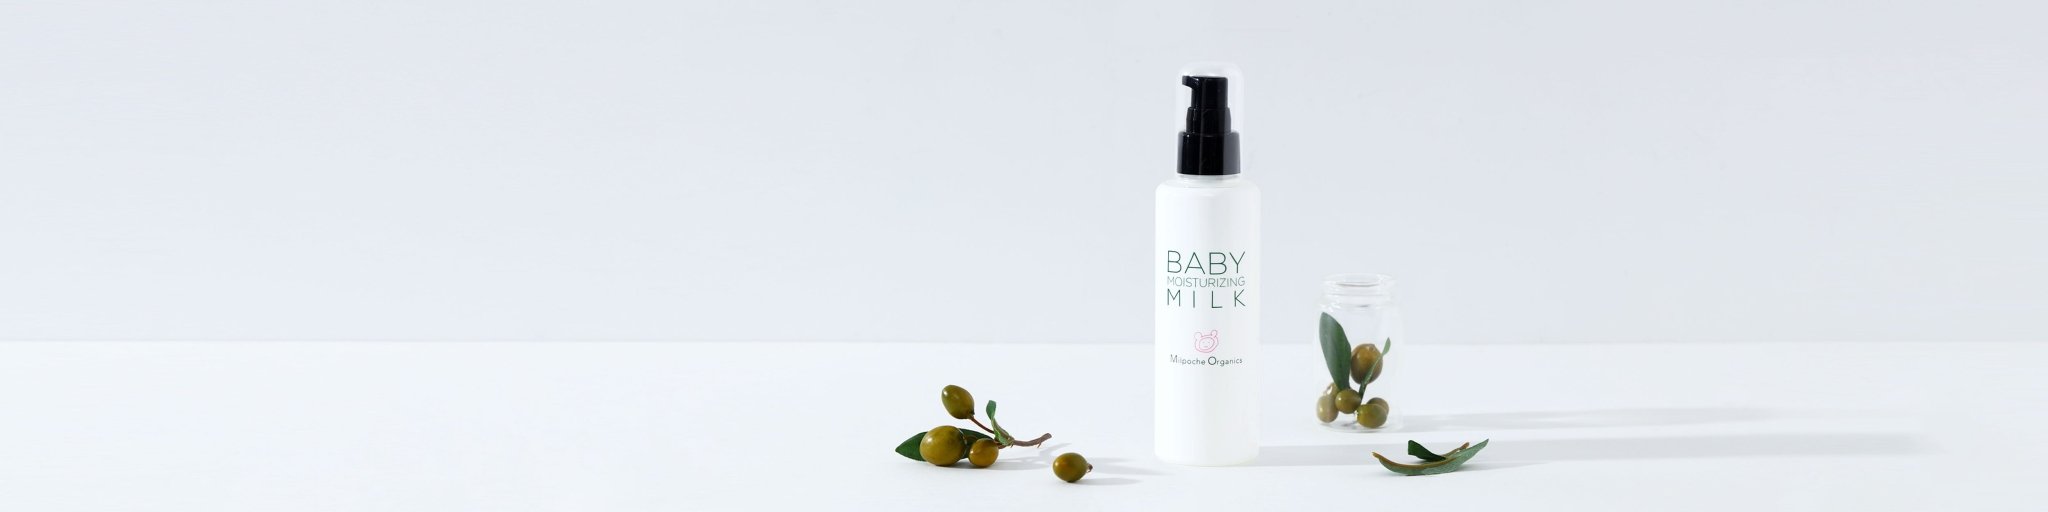 Milpoche Organics Baby milk 150ml - Tokyo Fresh Direct